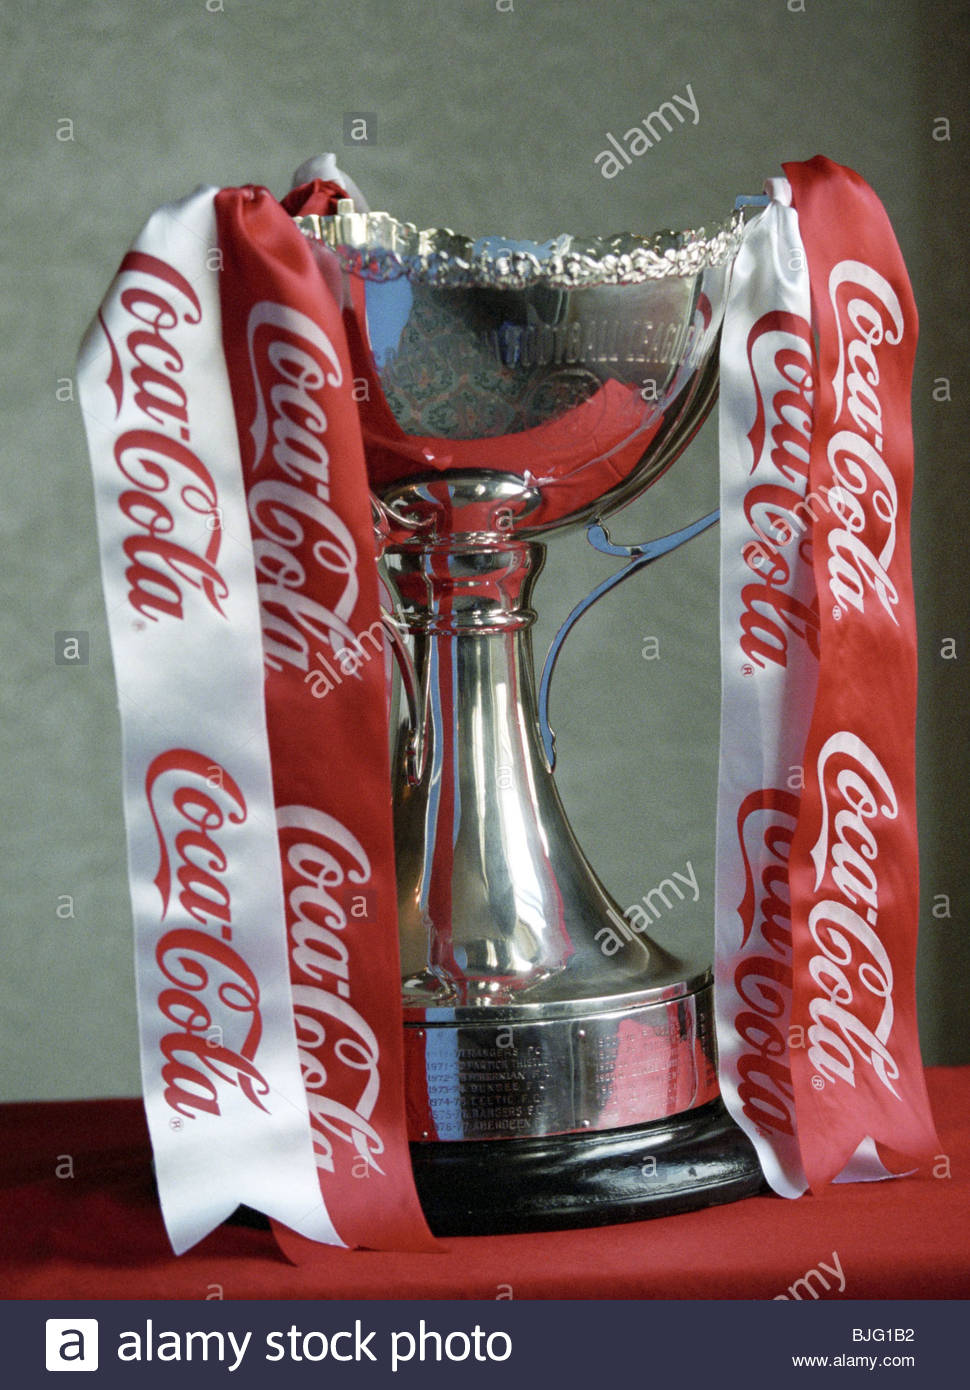 https://c8.alamy.com/comp/BJG1B2/season-19941995-the-coca-cola-sponsored-league-cup-BJG1B2.jpg